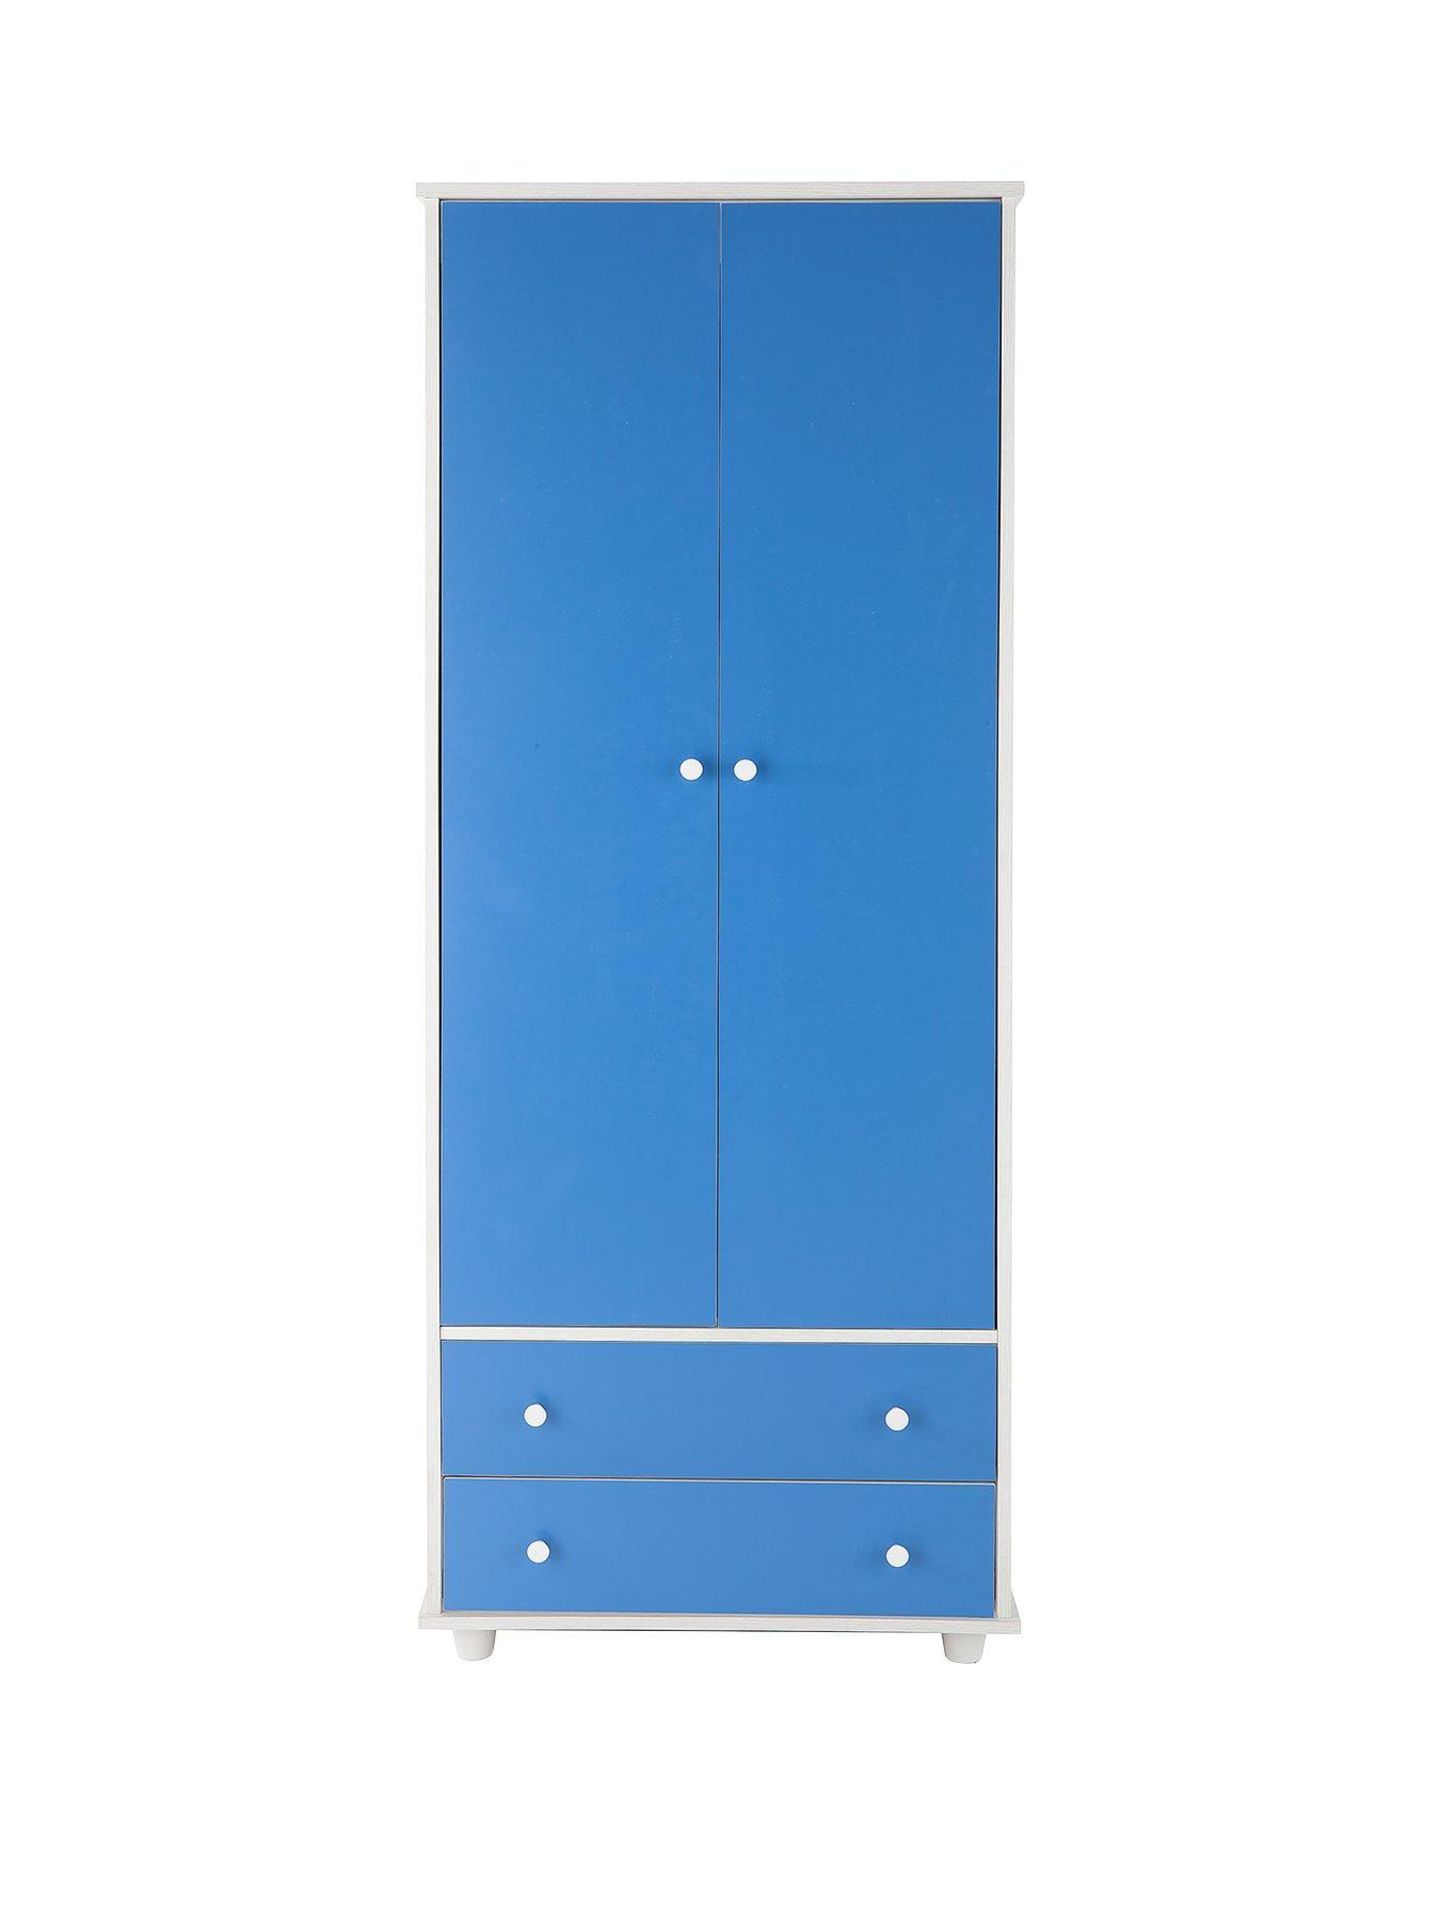 Boxed Item Miami 2 Doors 2 Drawers Wardrobe [Blue] 180X70X51Cm Rrp:£190.0